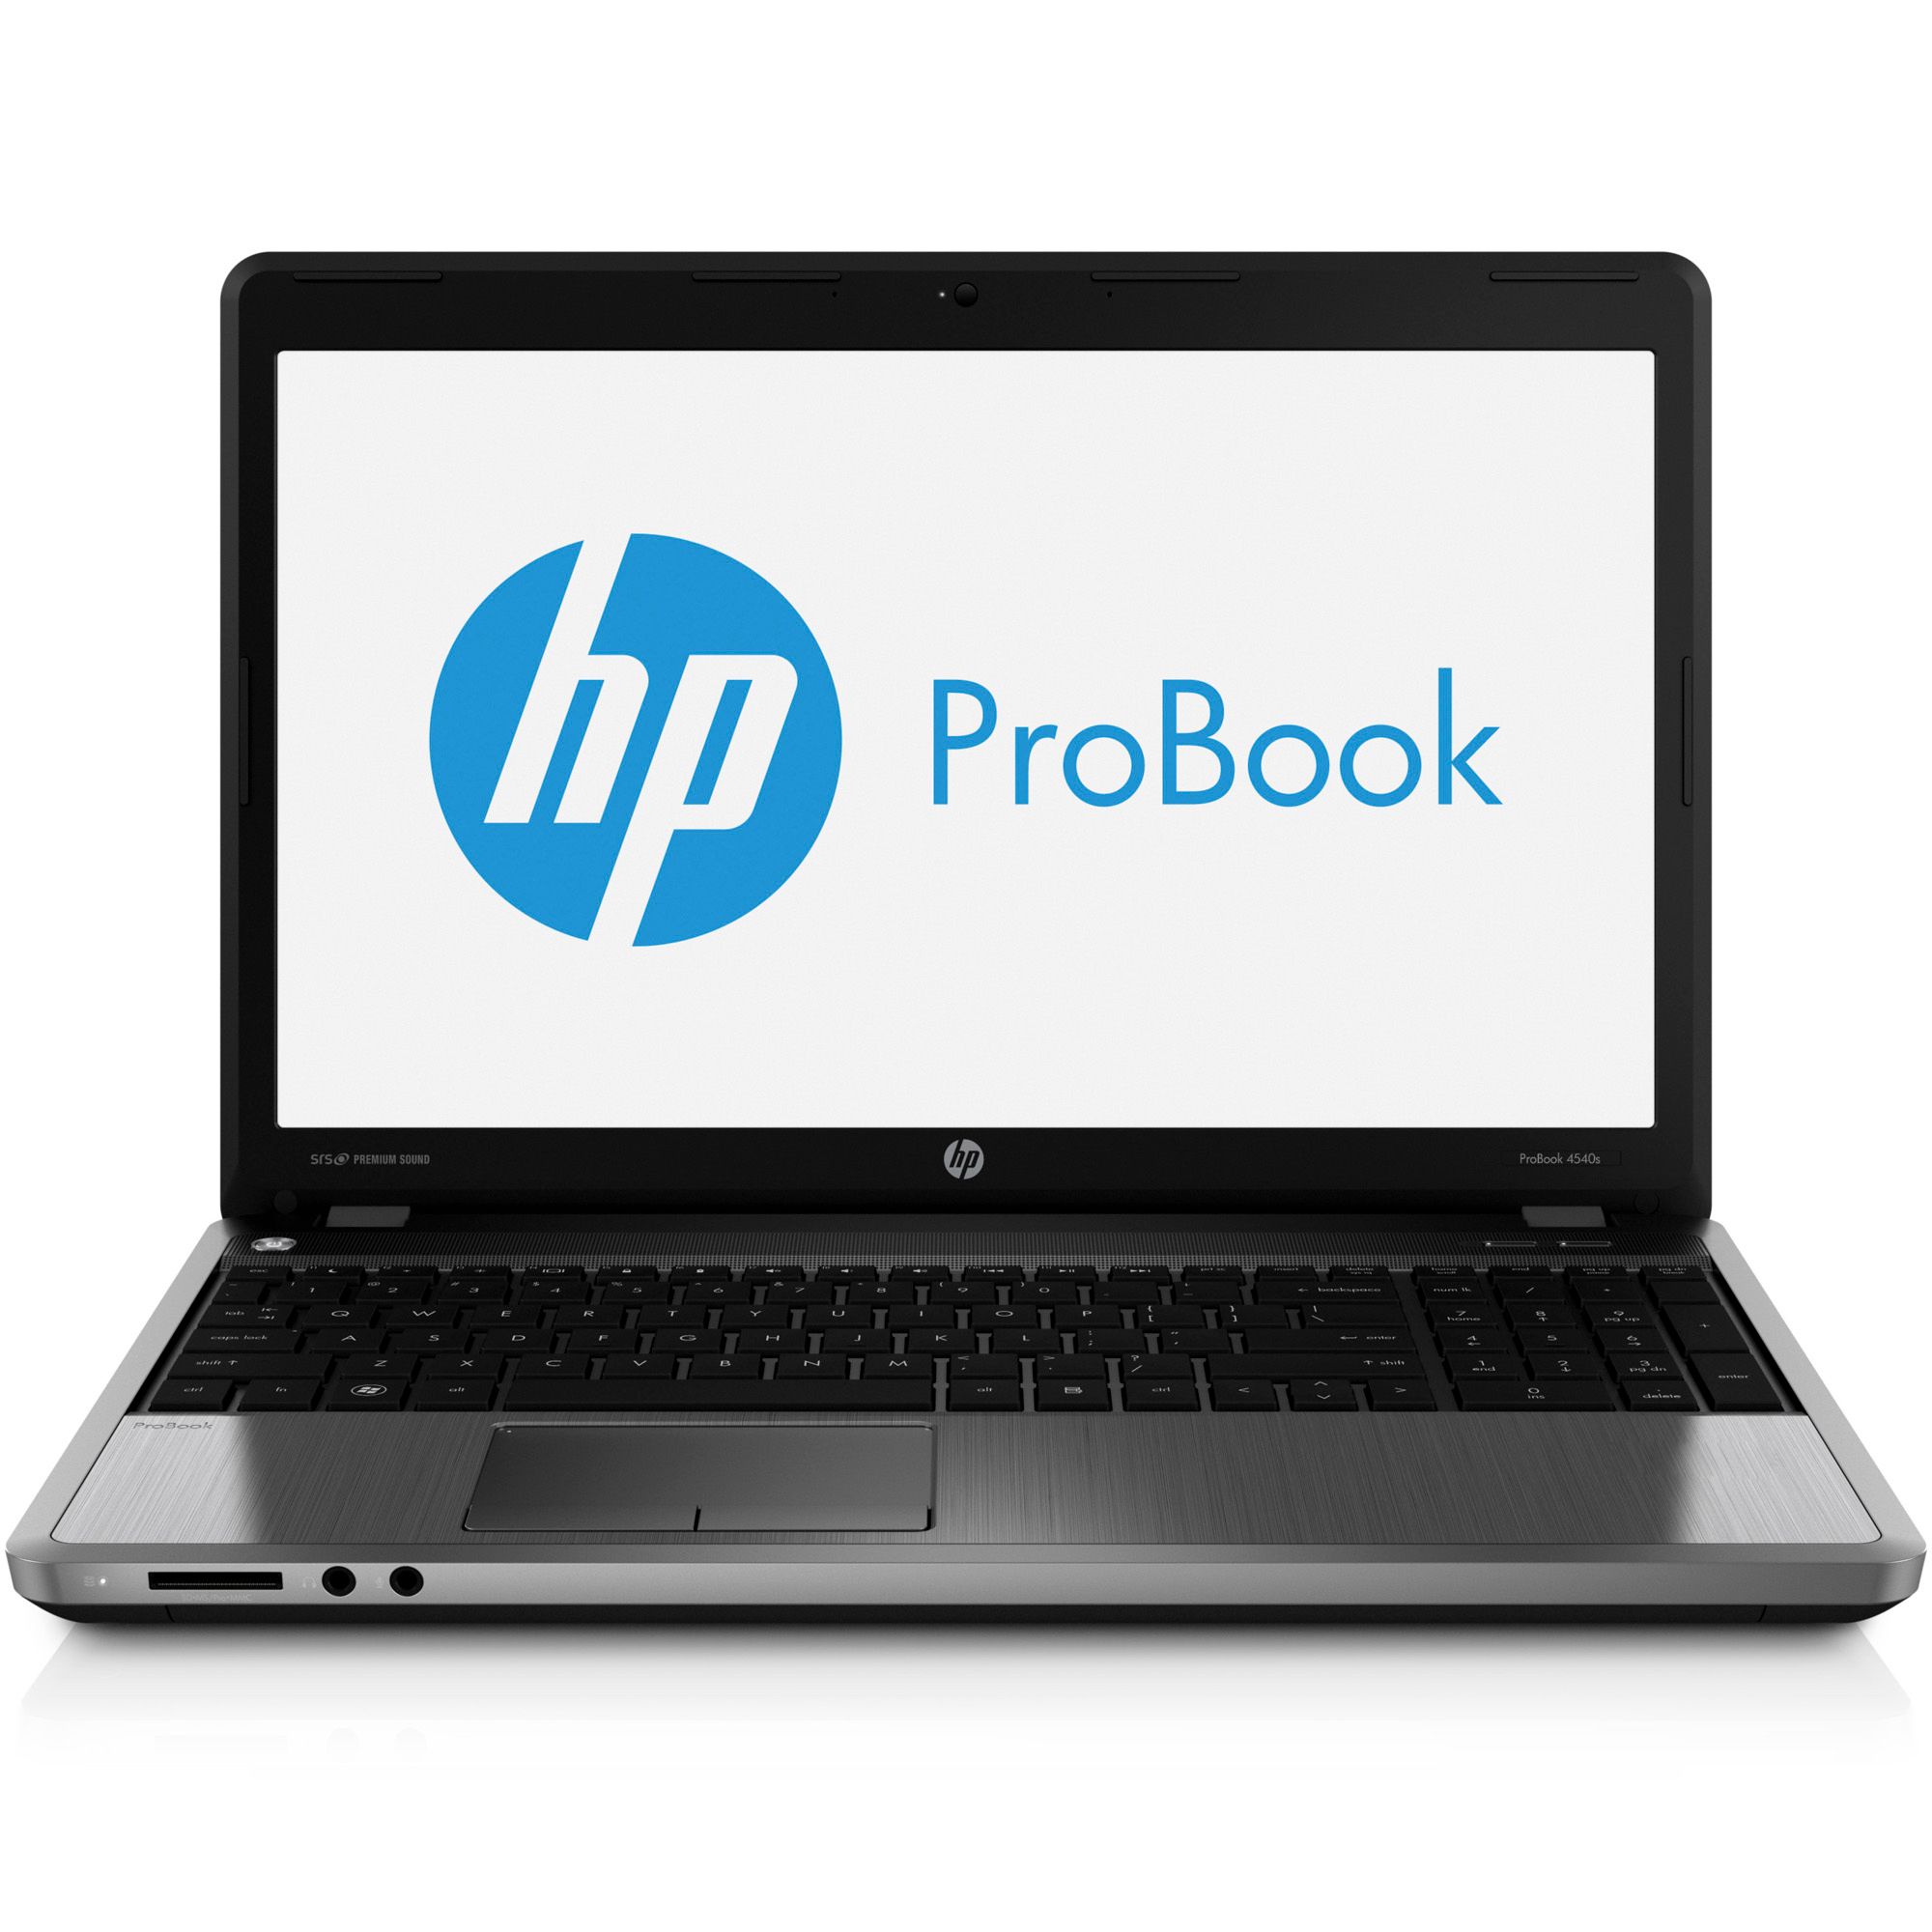 Laptop HP ProBook 4540s, Intel Core i3-2370M 2.40GHz, 4GB DDR3, 320GB SATA, DVD-RW, 15.6 Inch, Tastatura Numerica